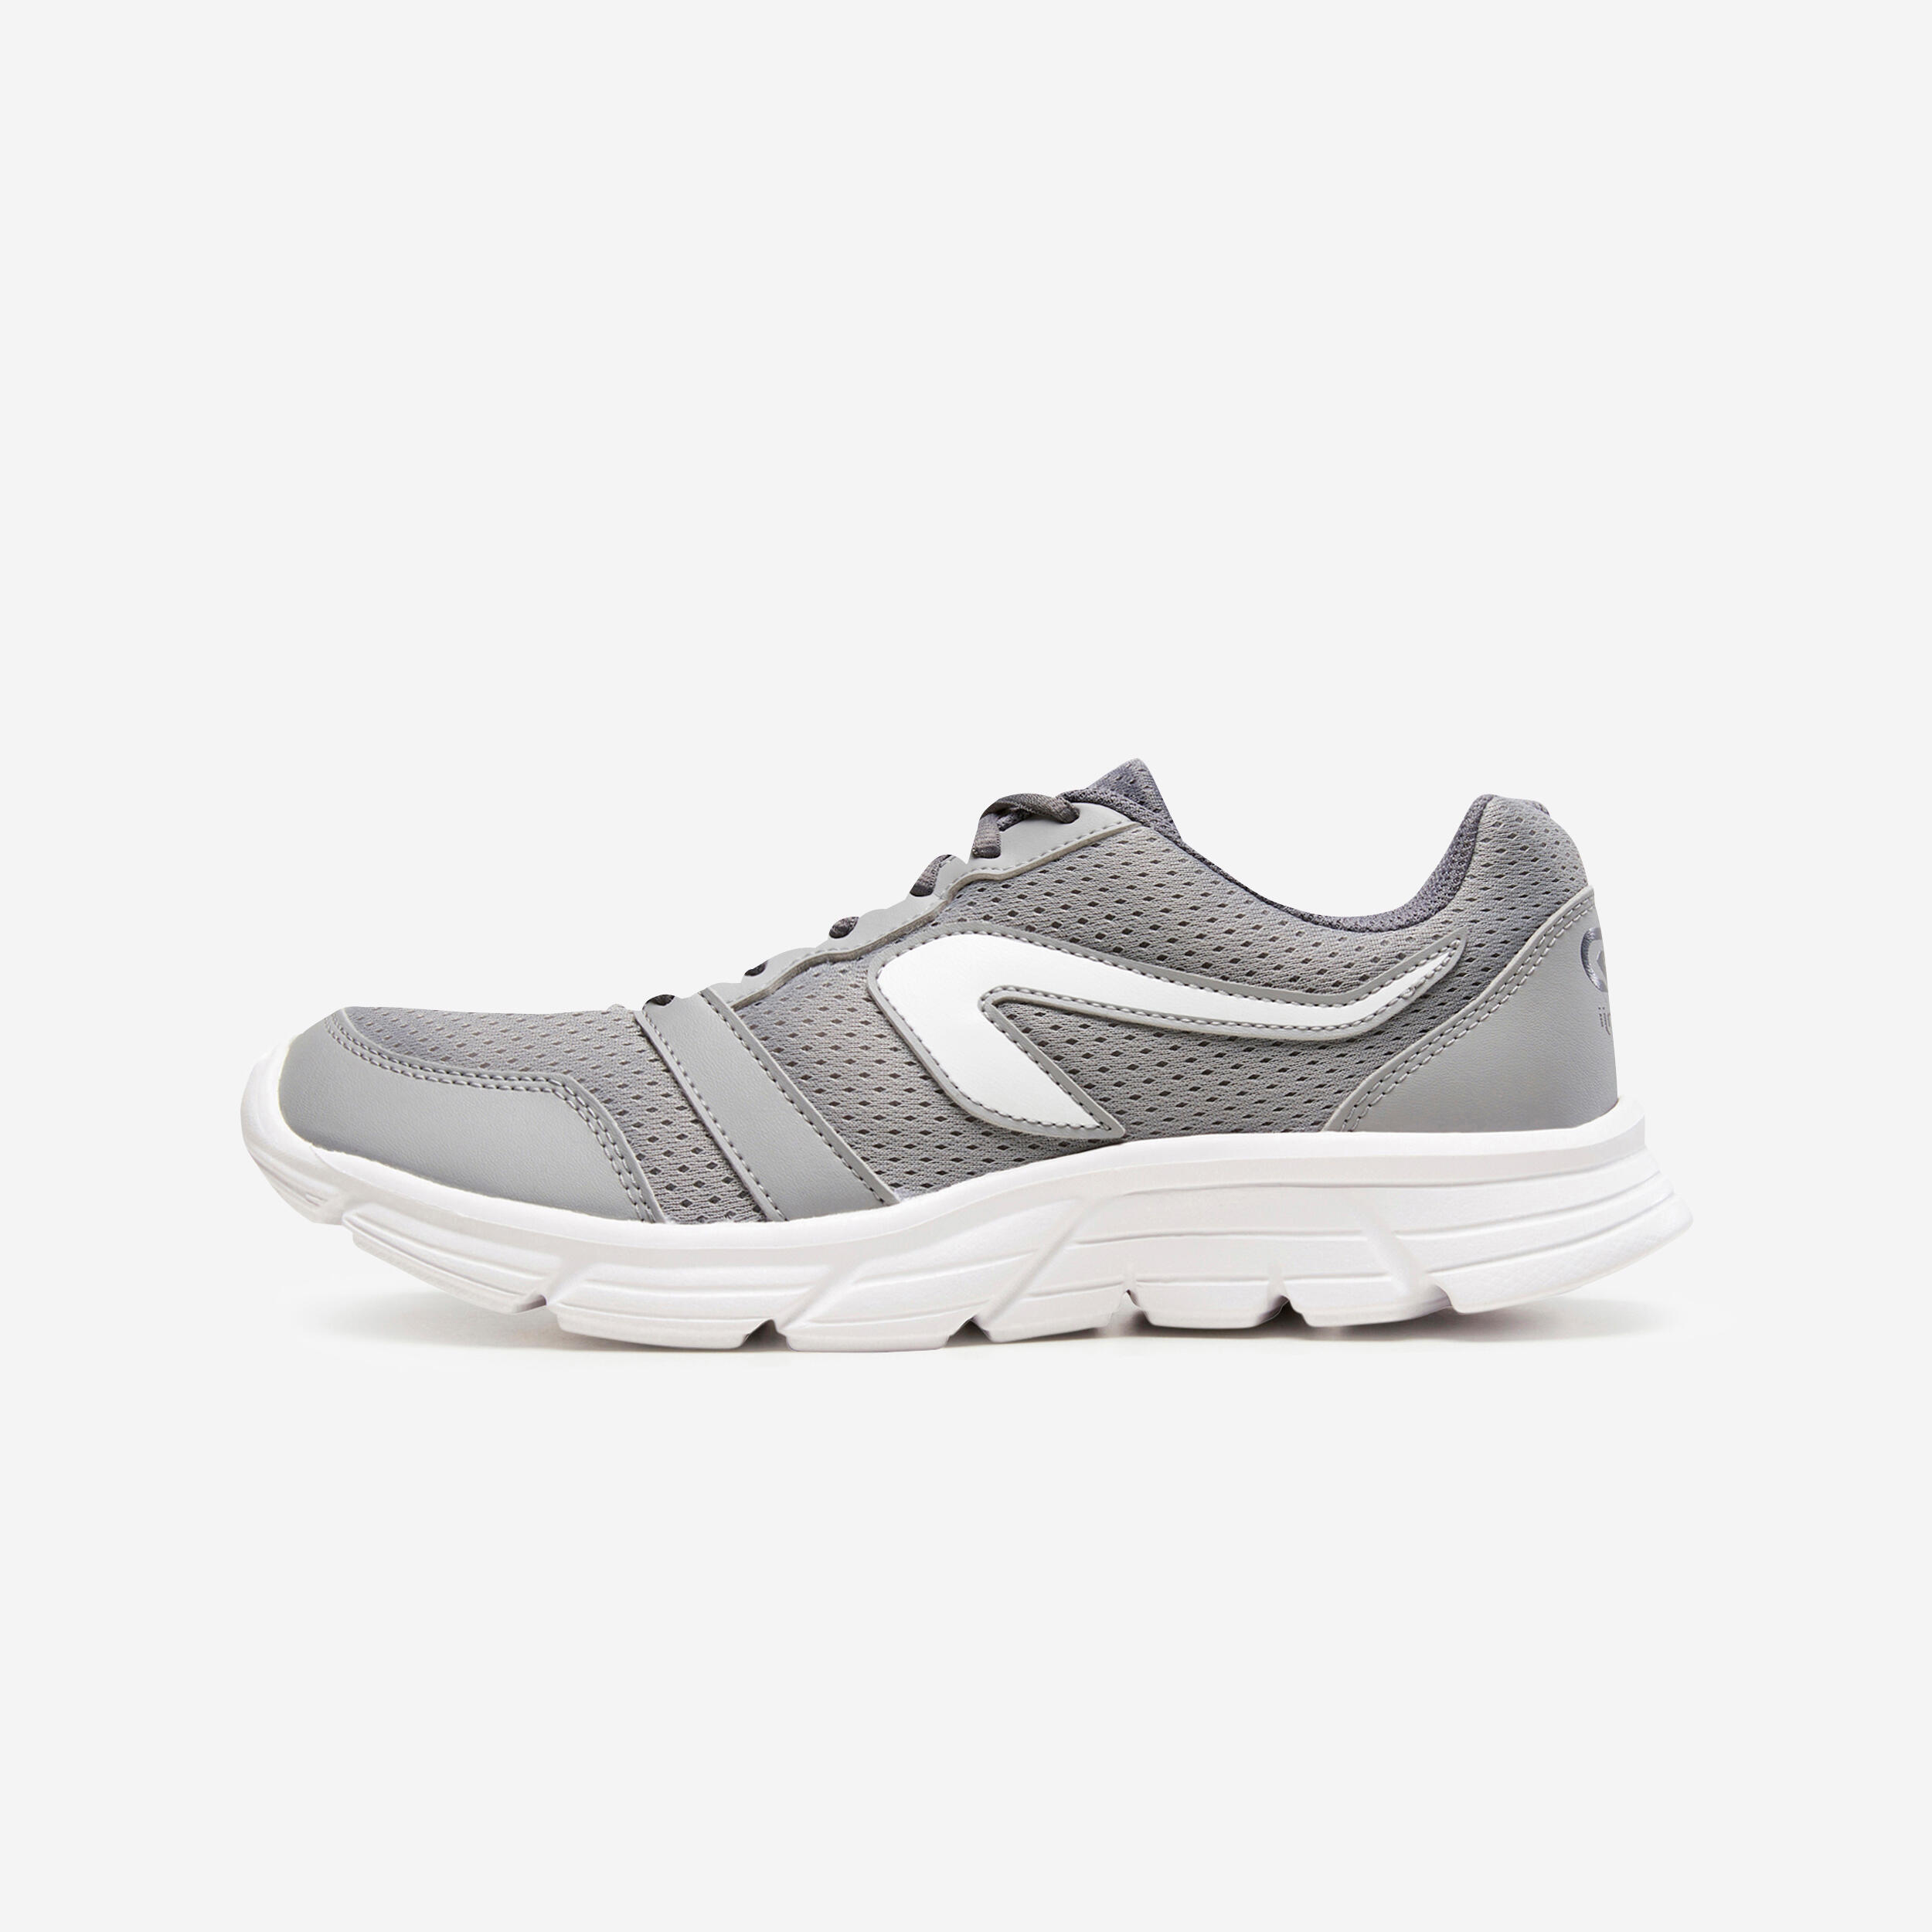 Men's Running Shoes - 100 Grey - Zinc grey, Snow white - Kalenji ...